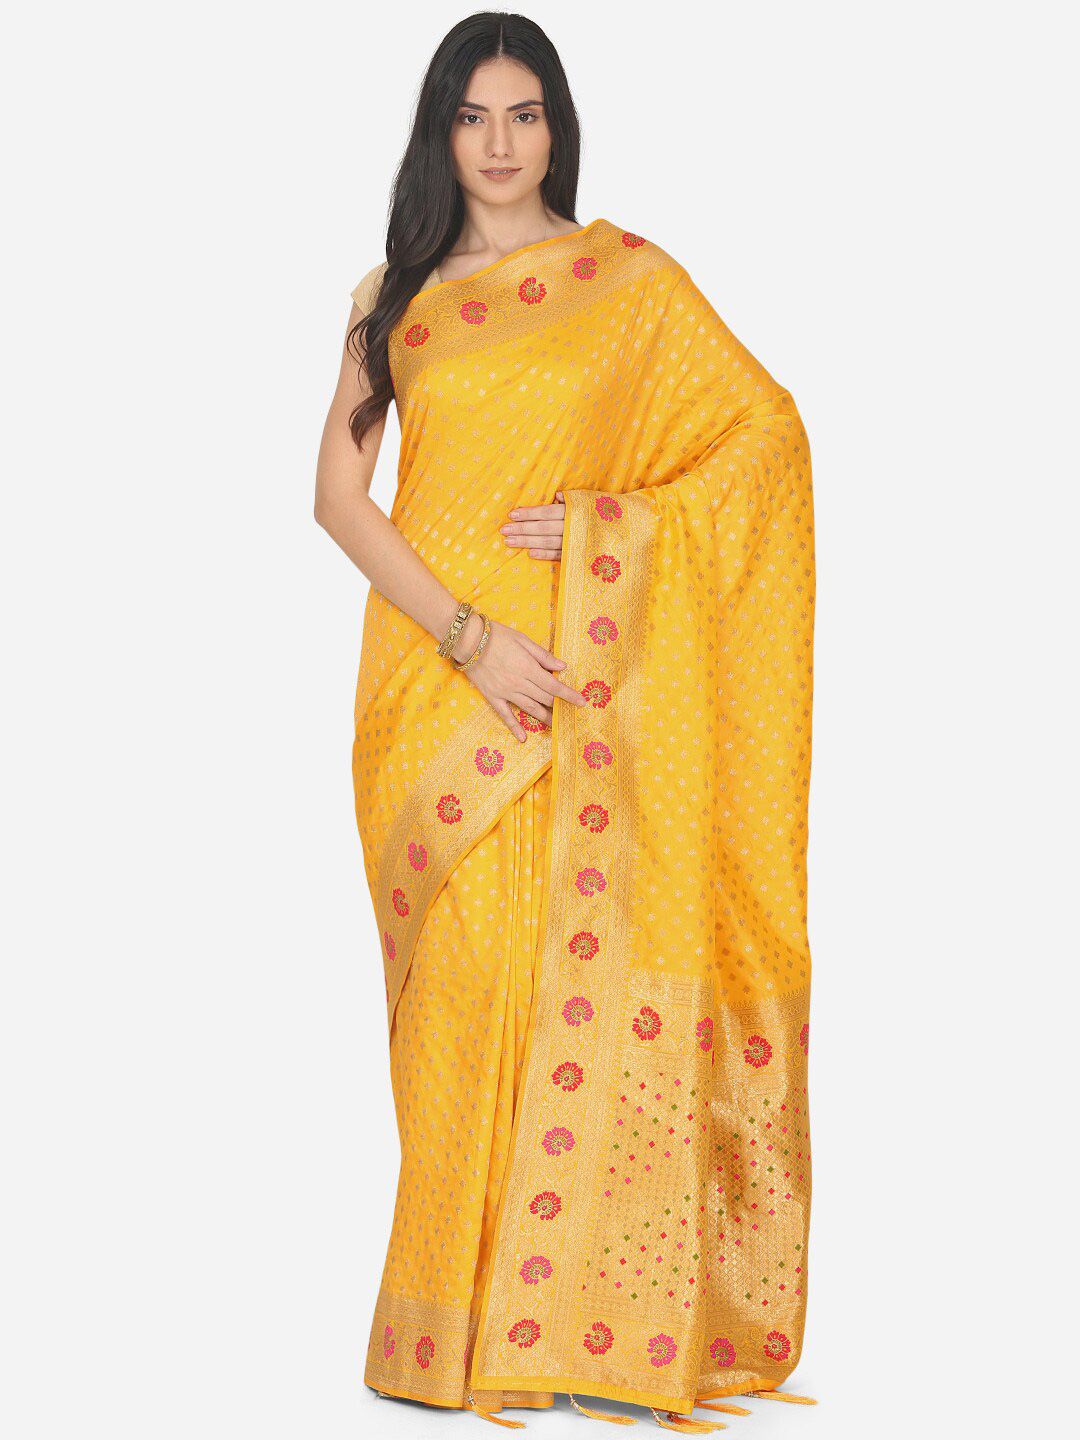 BOMBAY SELECTIONS Yellow & Gold Ethnic Motifs Art Silk Banarasi Saree Price in India